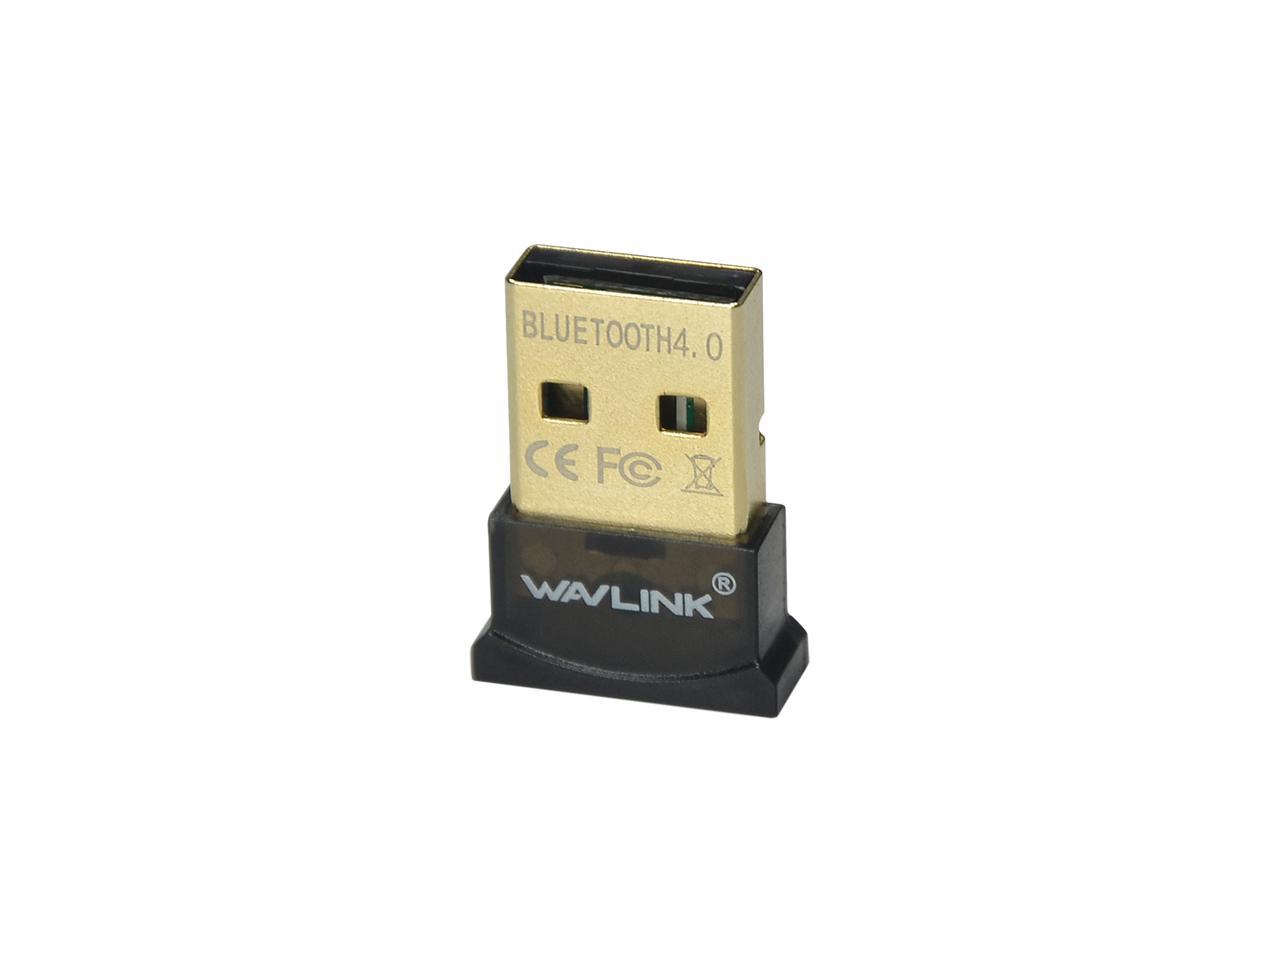 USB 2.0 Mini Bluetooth 2.0 CSR4.0 Adapter Dongle for PC LAPTOP 2018 US 